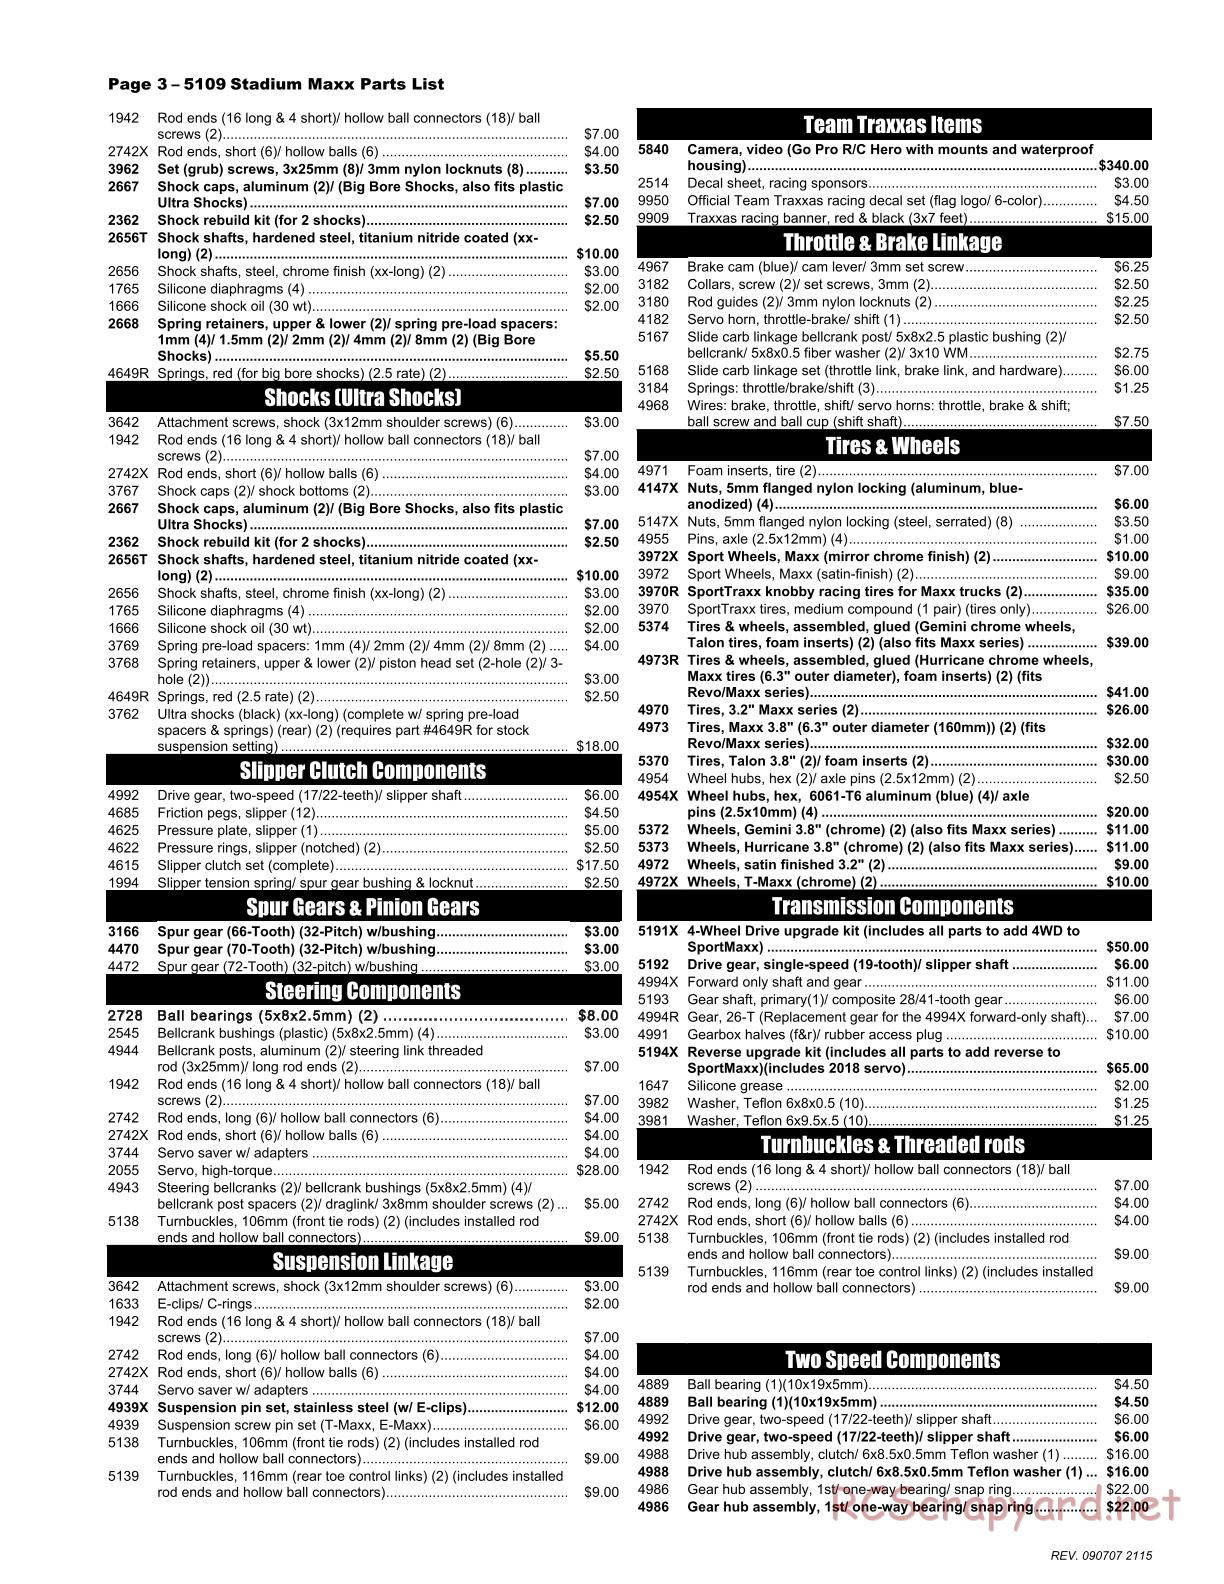 Traxxas - S-Maxx 5109 - Parts List - Page 3